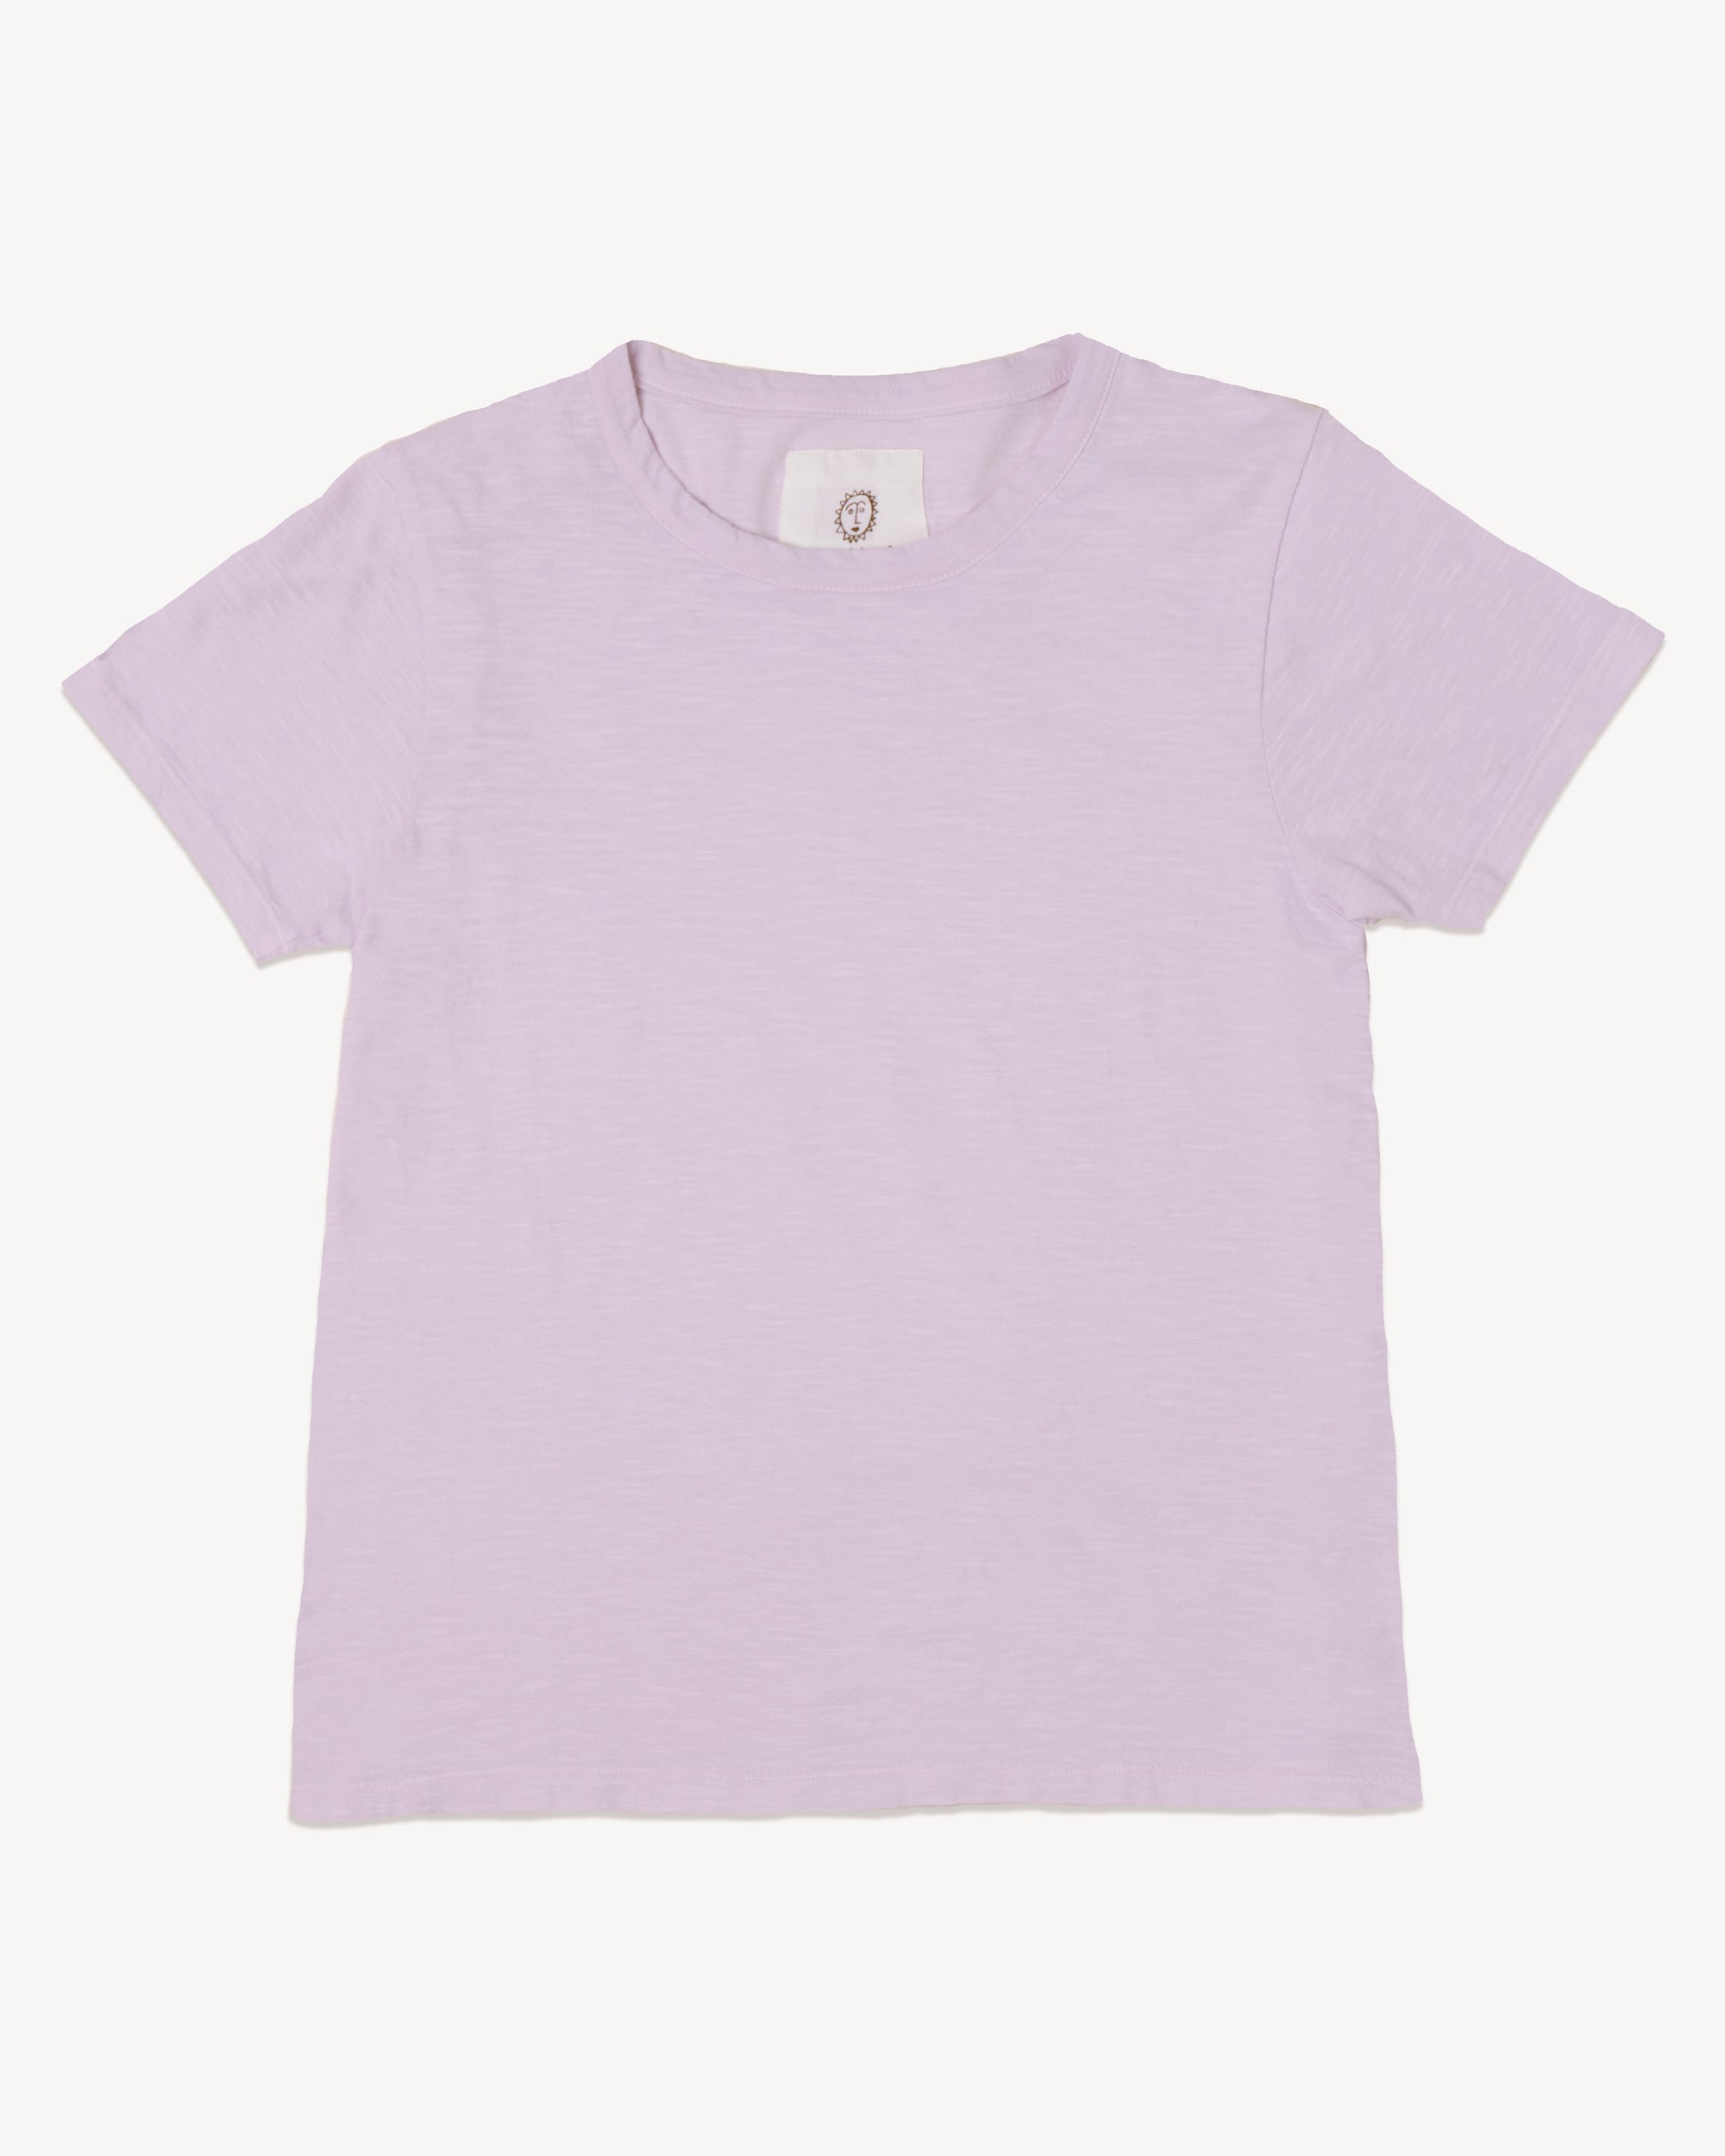 Saturday Tee - Knit T-Shirt - Orchid Hush - Printfresh